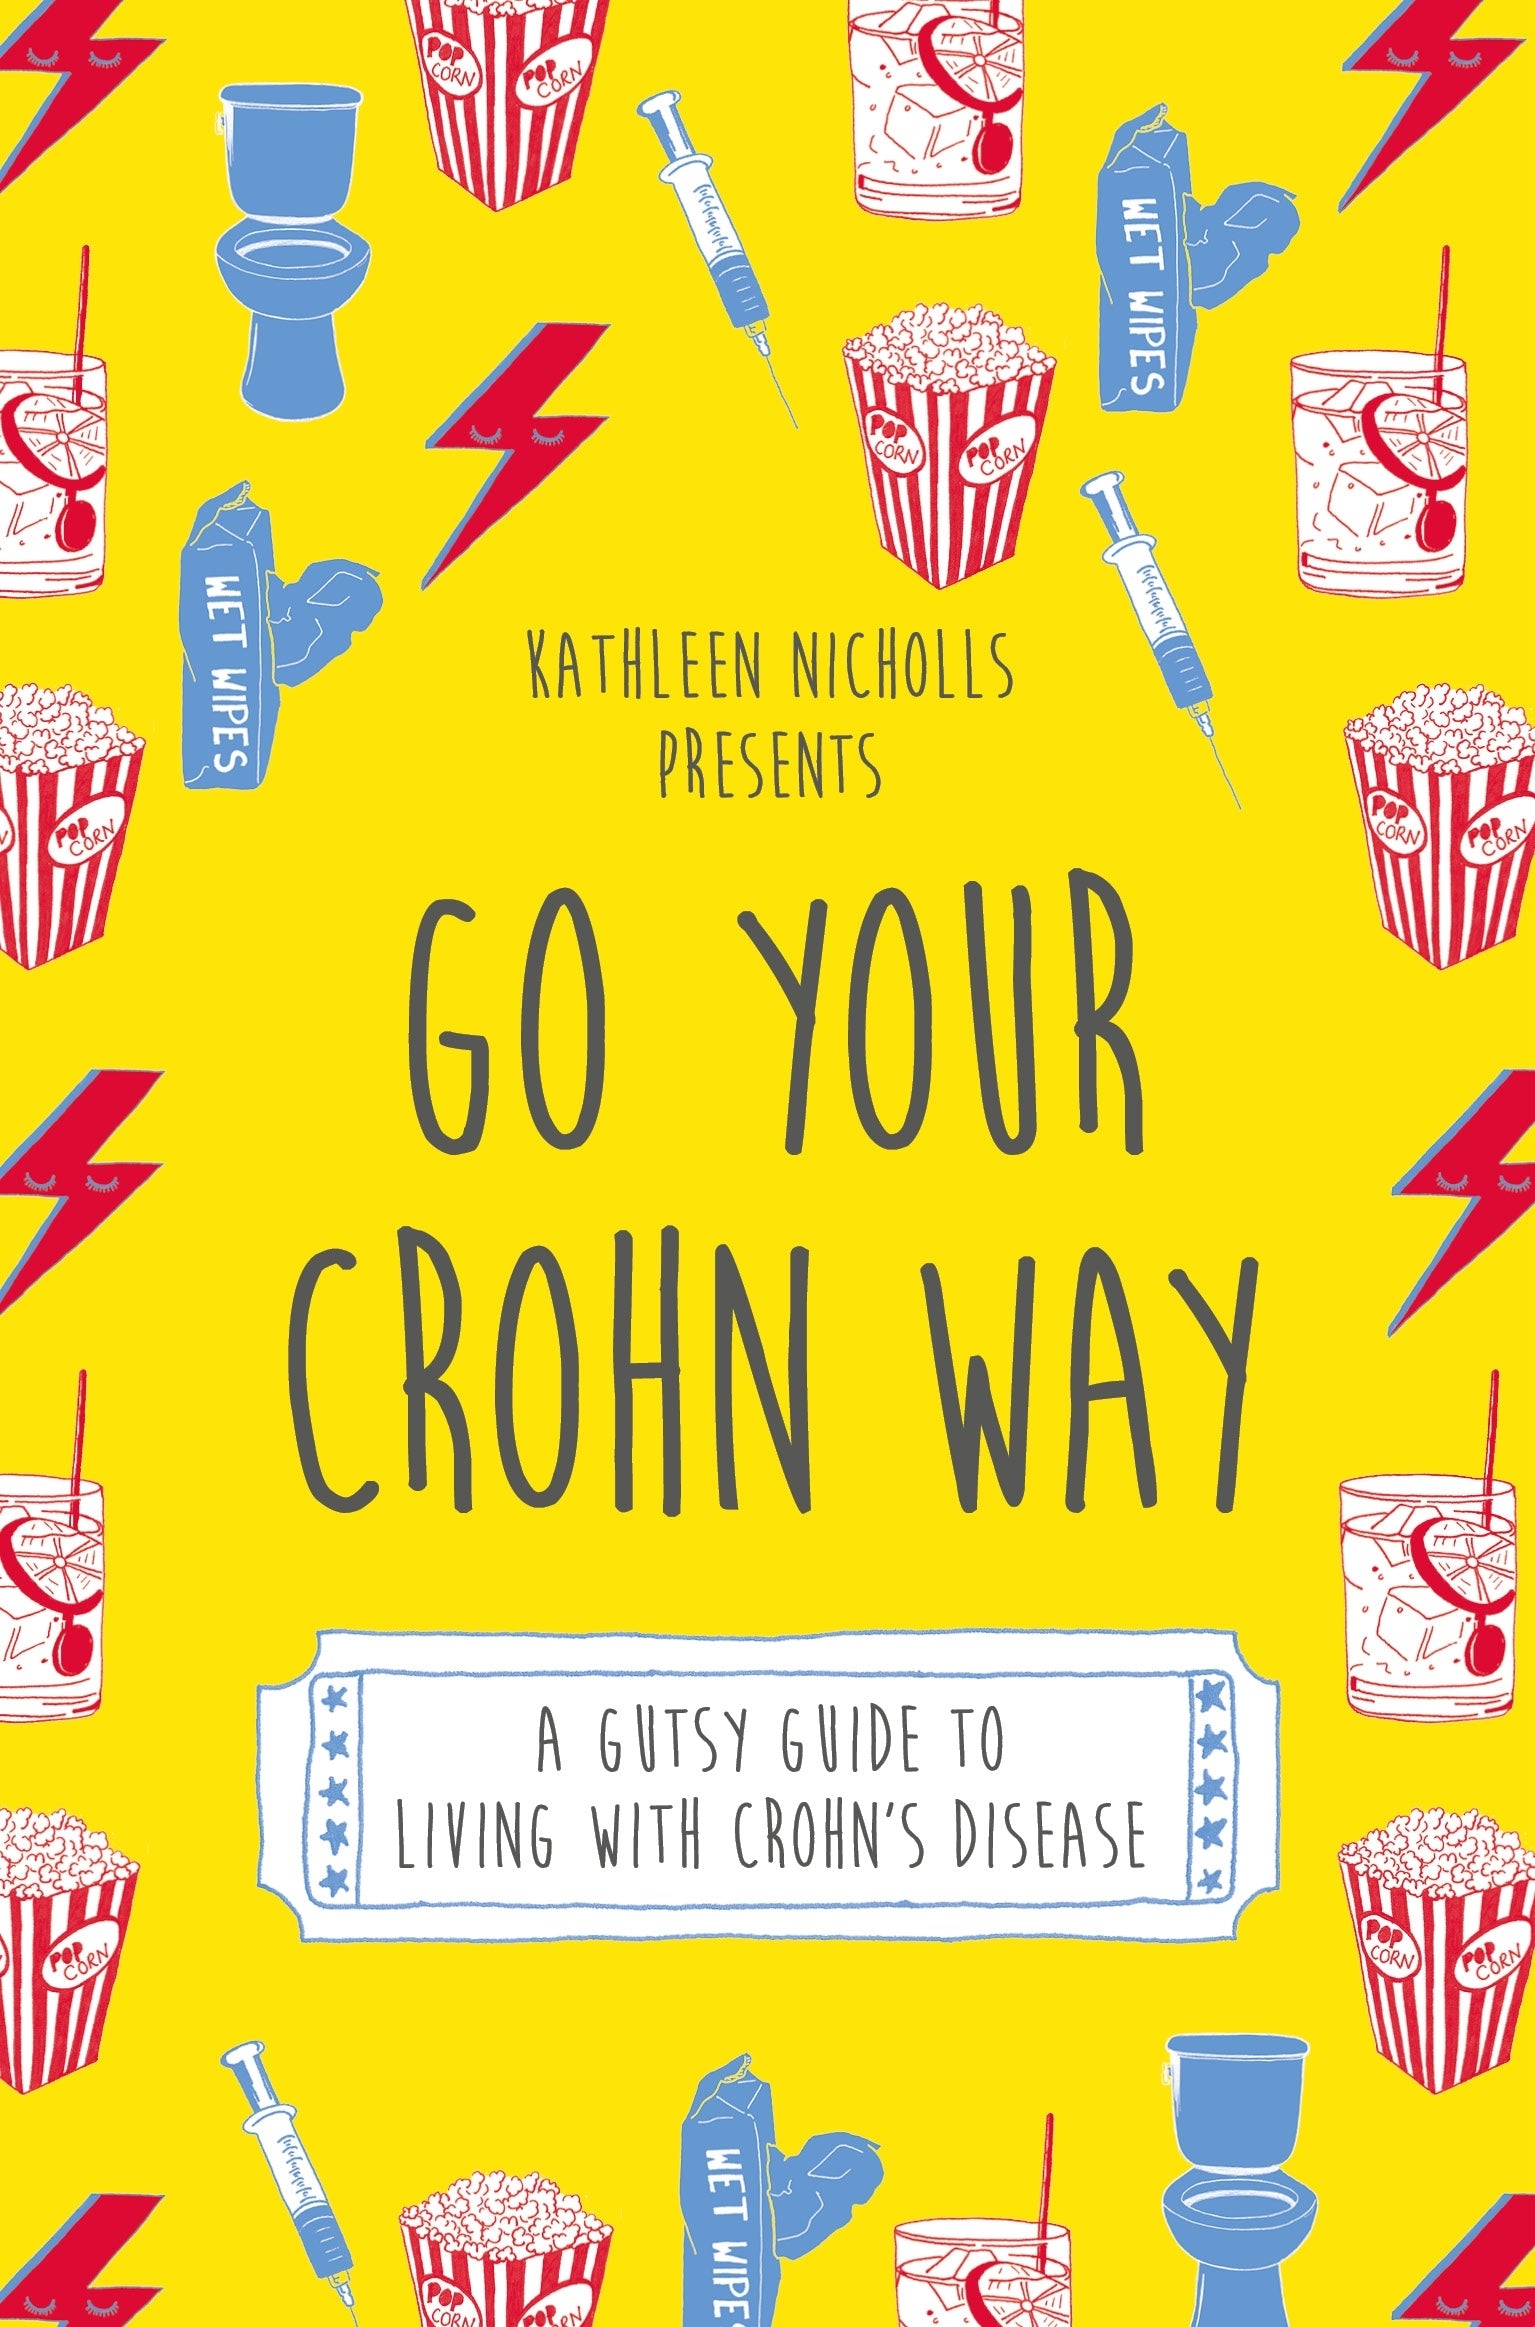 Go Your Crohn Way by Kathleen Nicholls